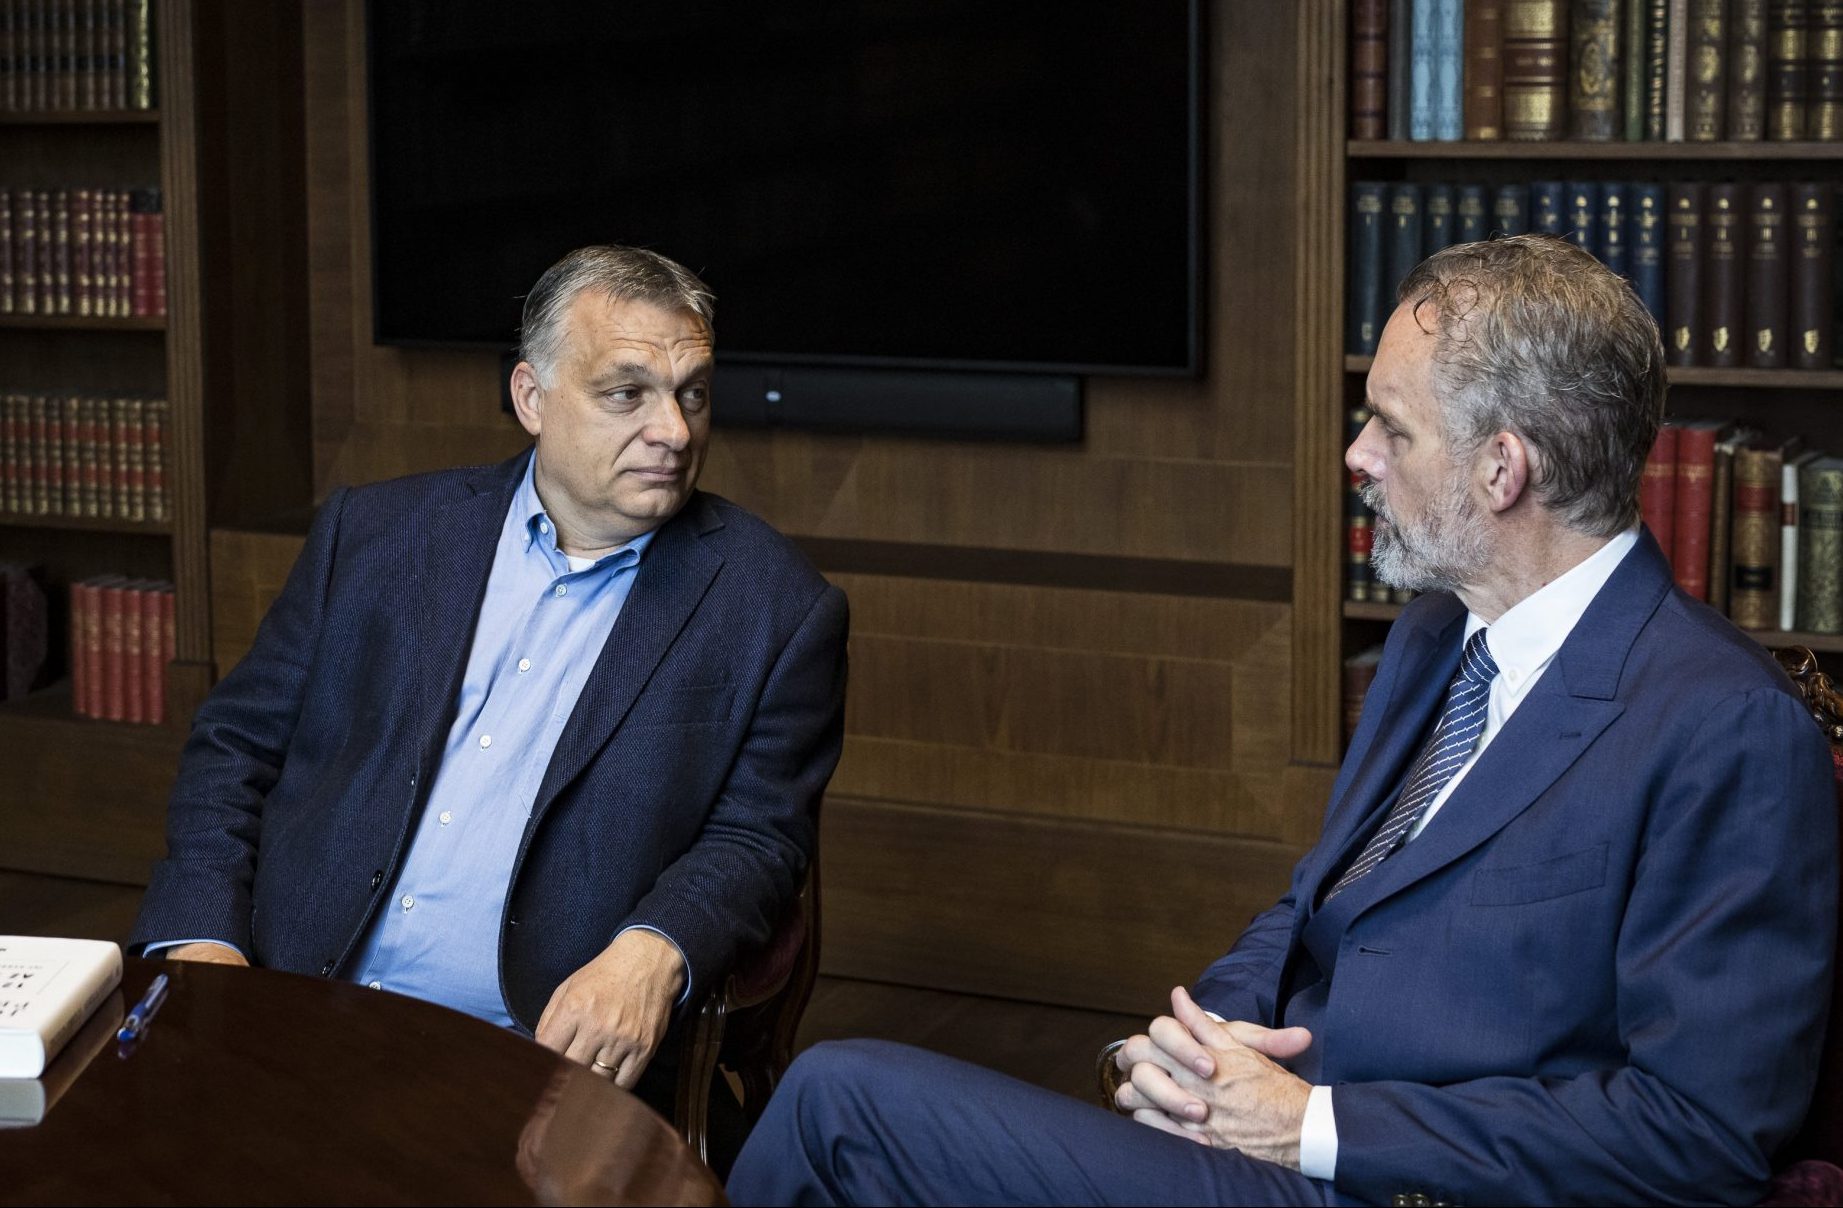 Orbán Meets Jordan Peterson in Budapest